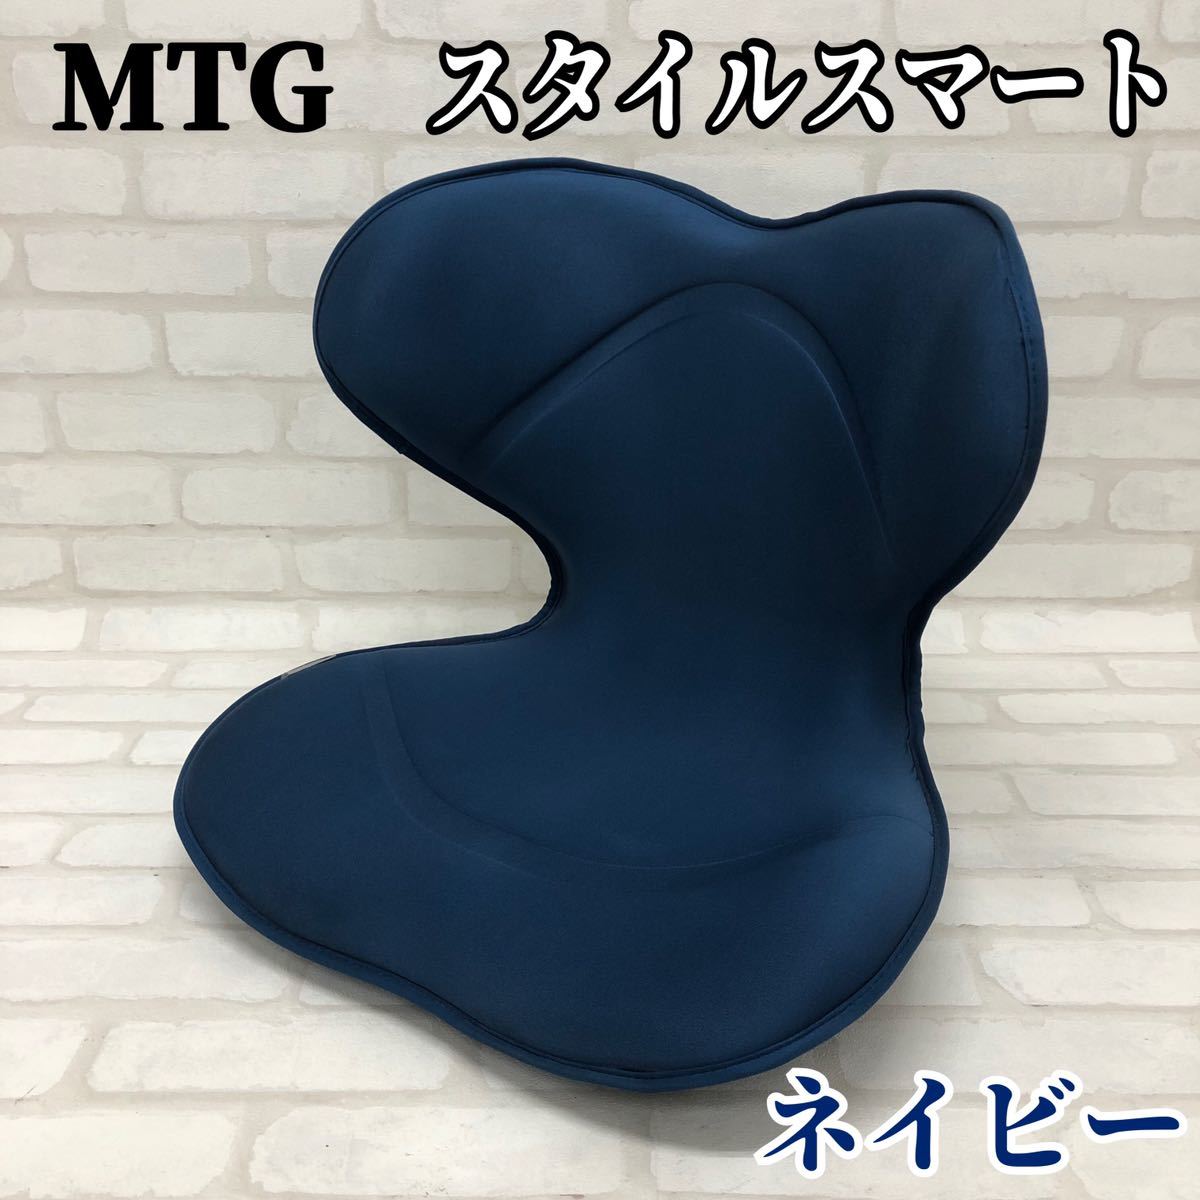 Style SMART MTG 姿勢矯正 骨盤サポート チェア 座椅子 腰痛-